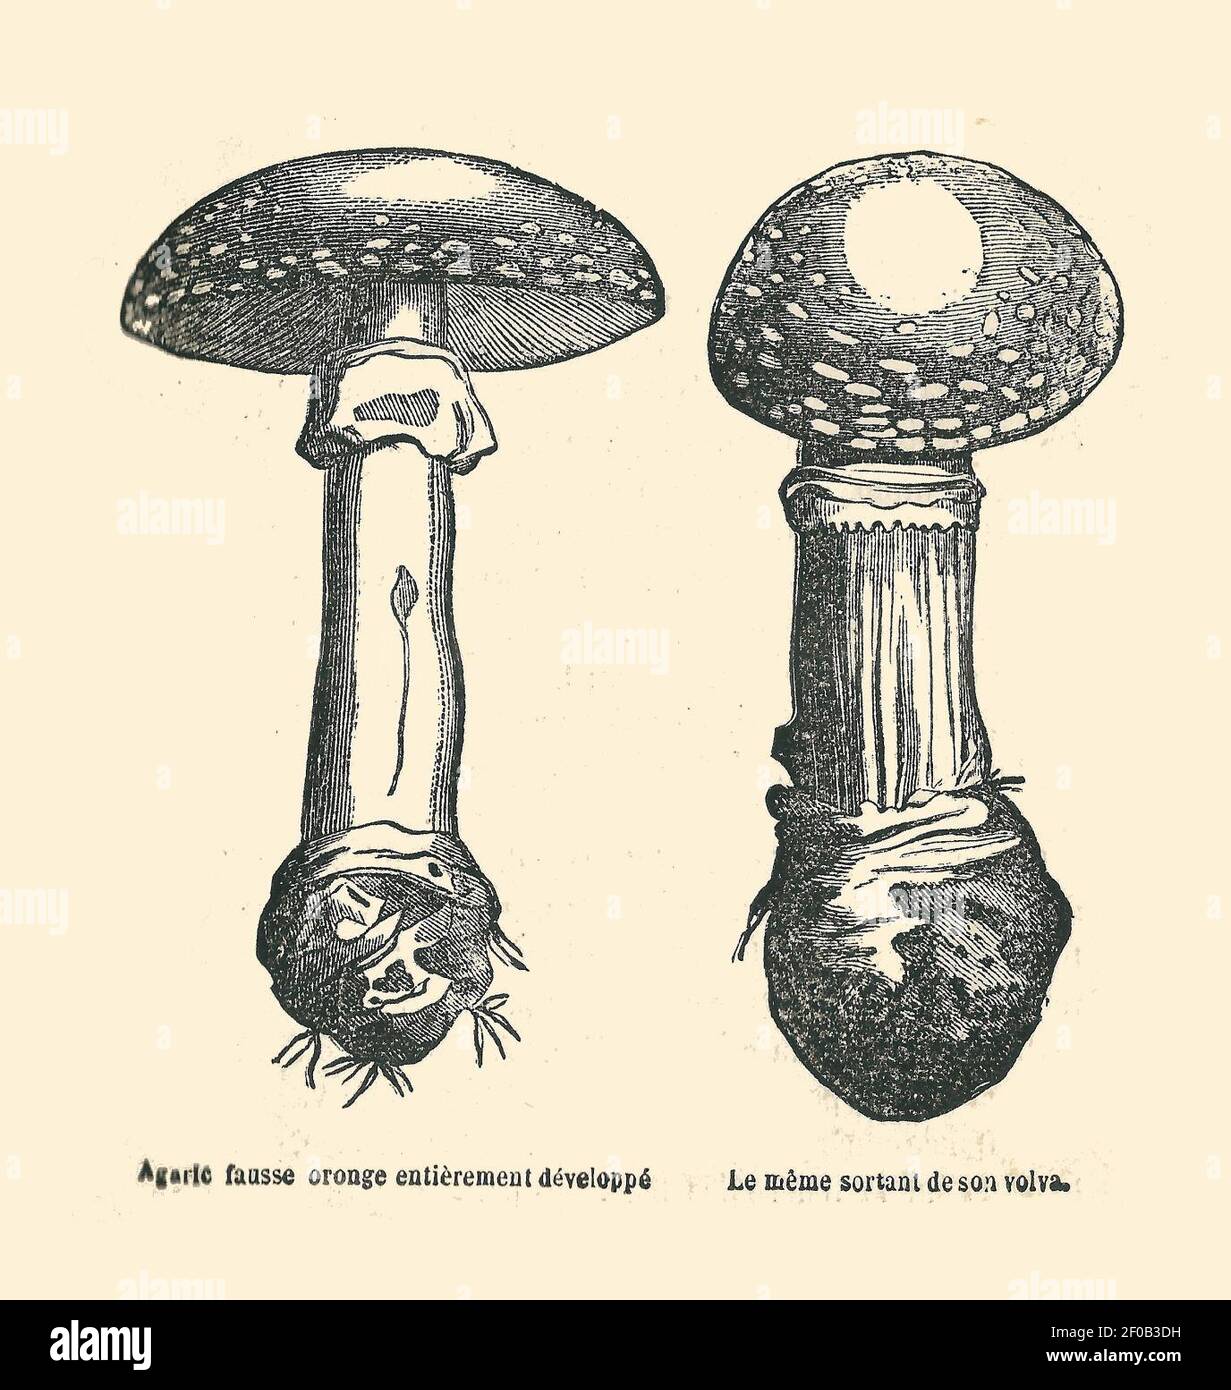 Plantes usuelles-Ysabeau-1878-agaric fausse oronge. Stock Photo